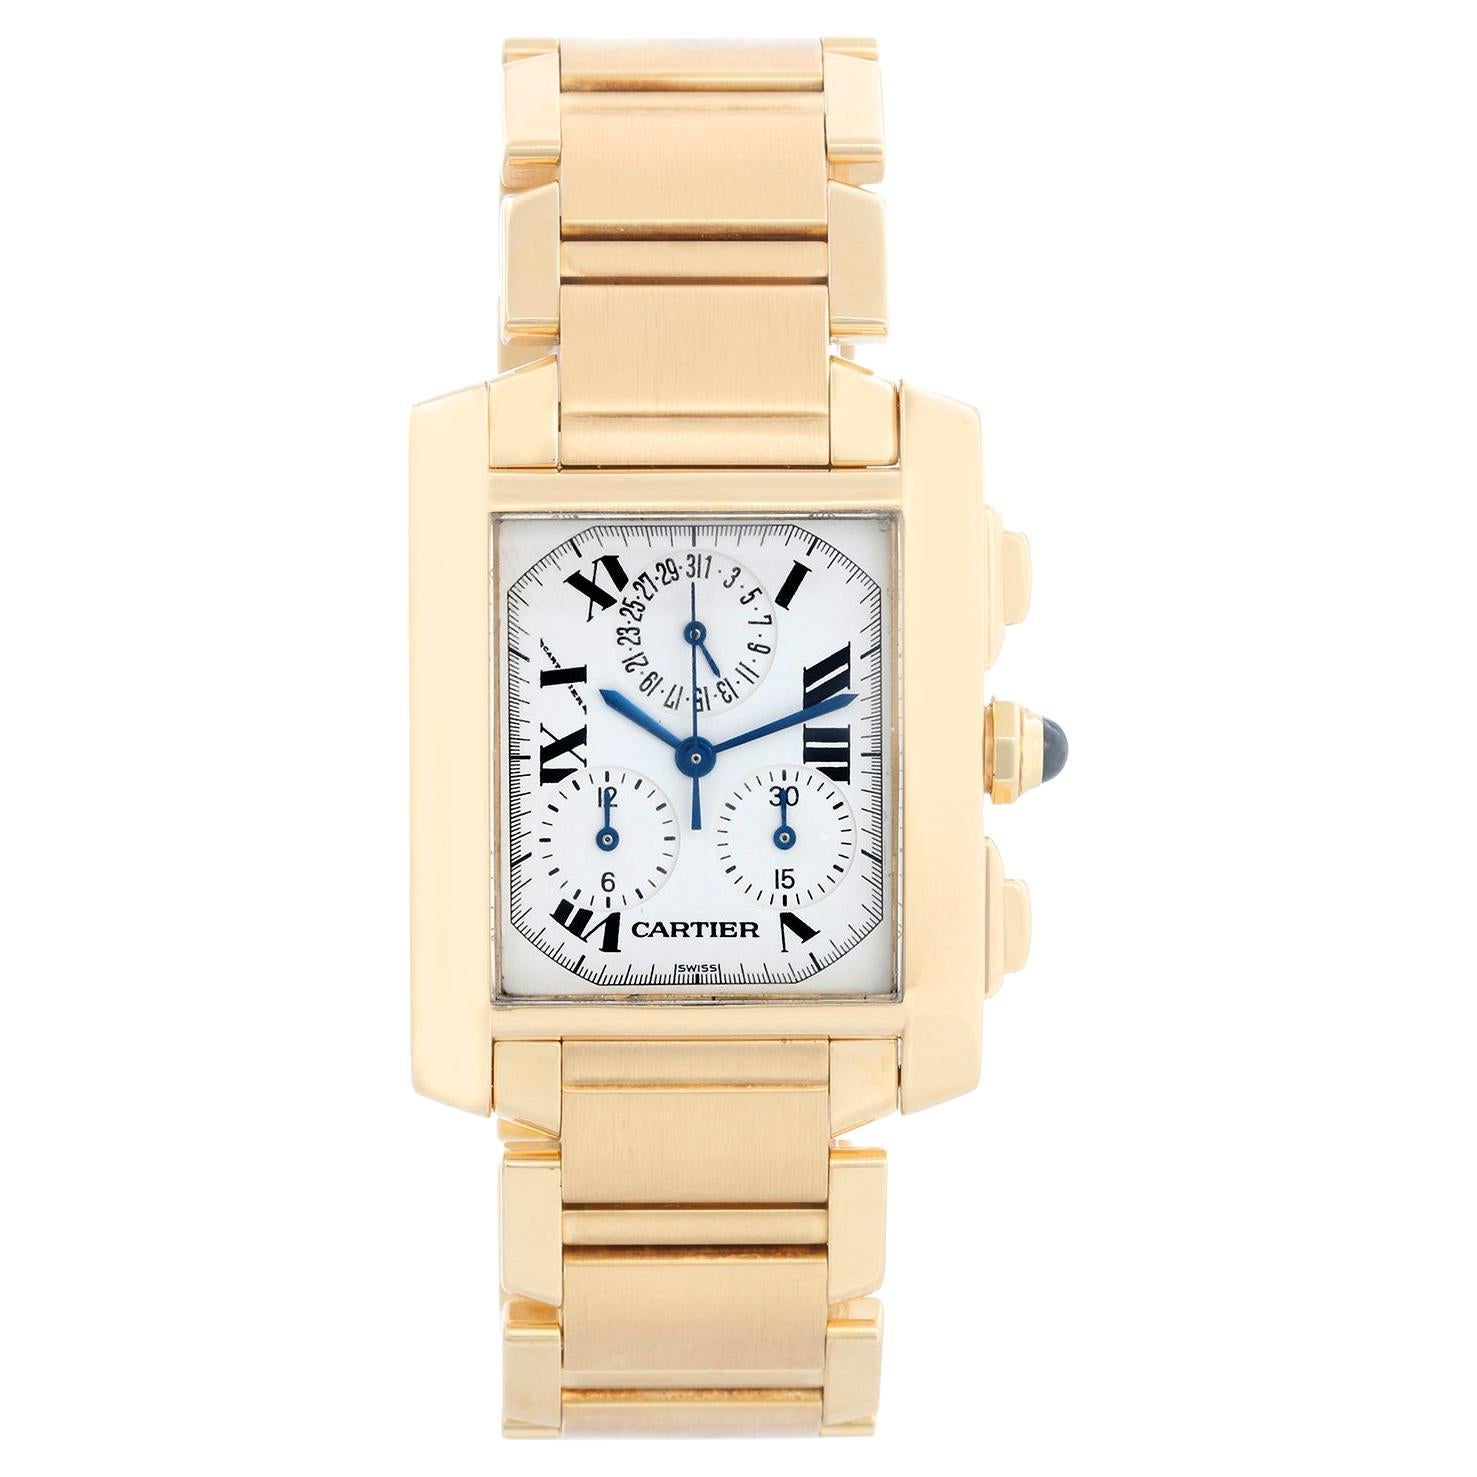 Cartier Tank Francaise Chronograph Men's 18k Gold Watch  W5000556